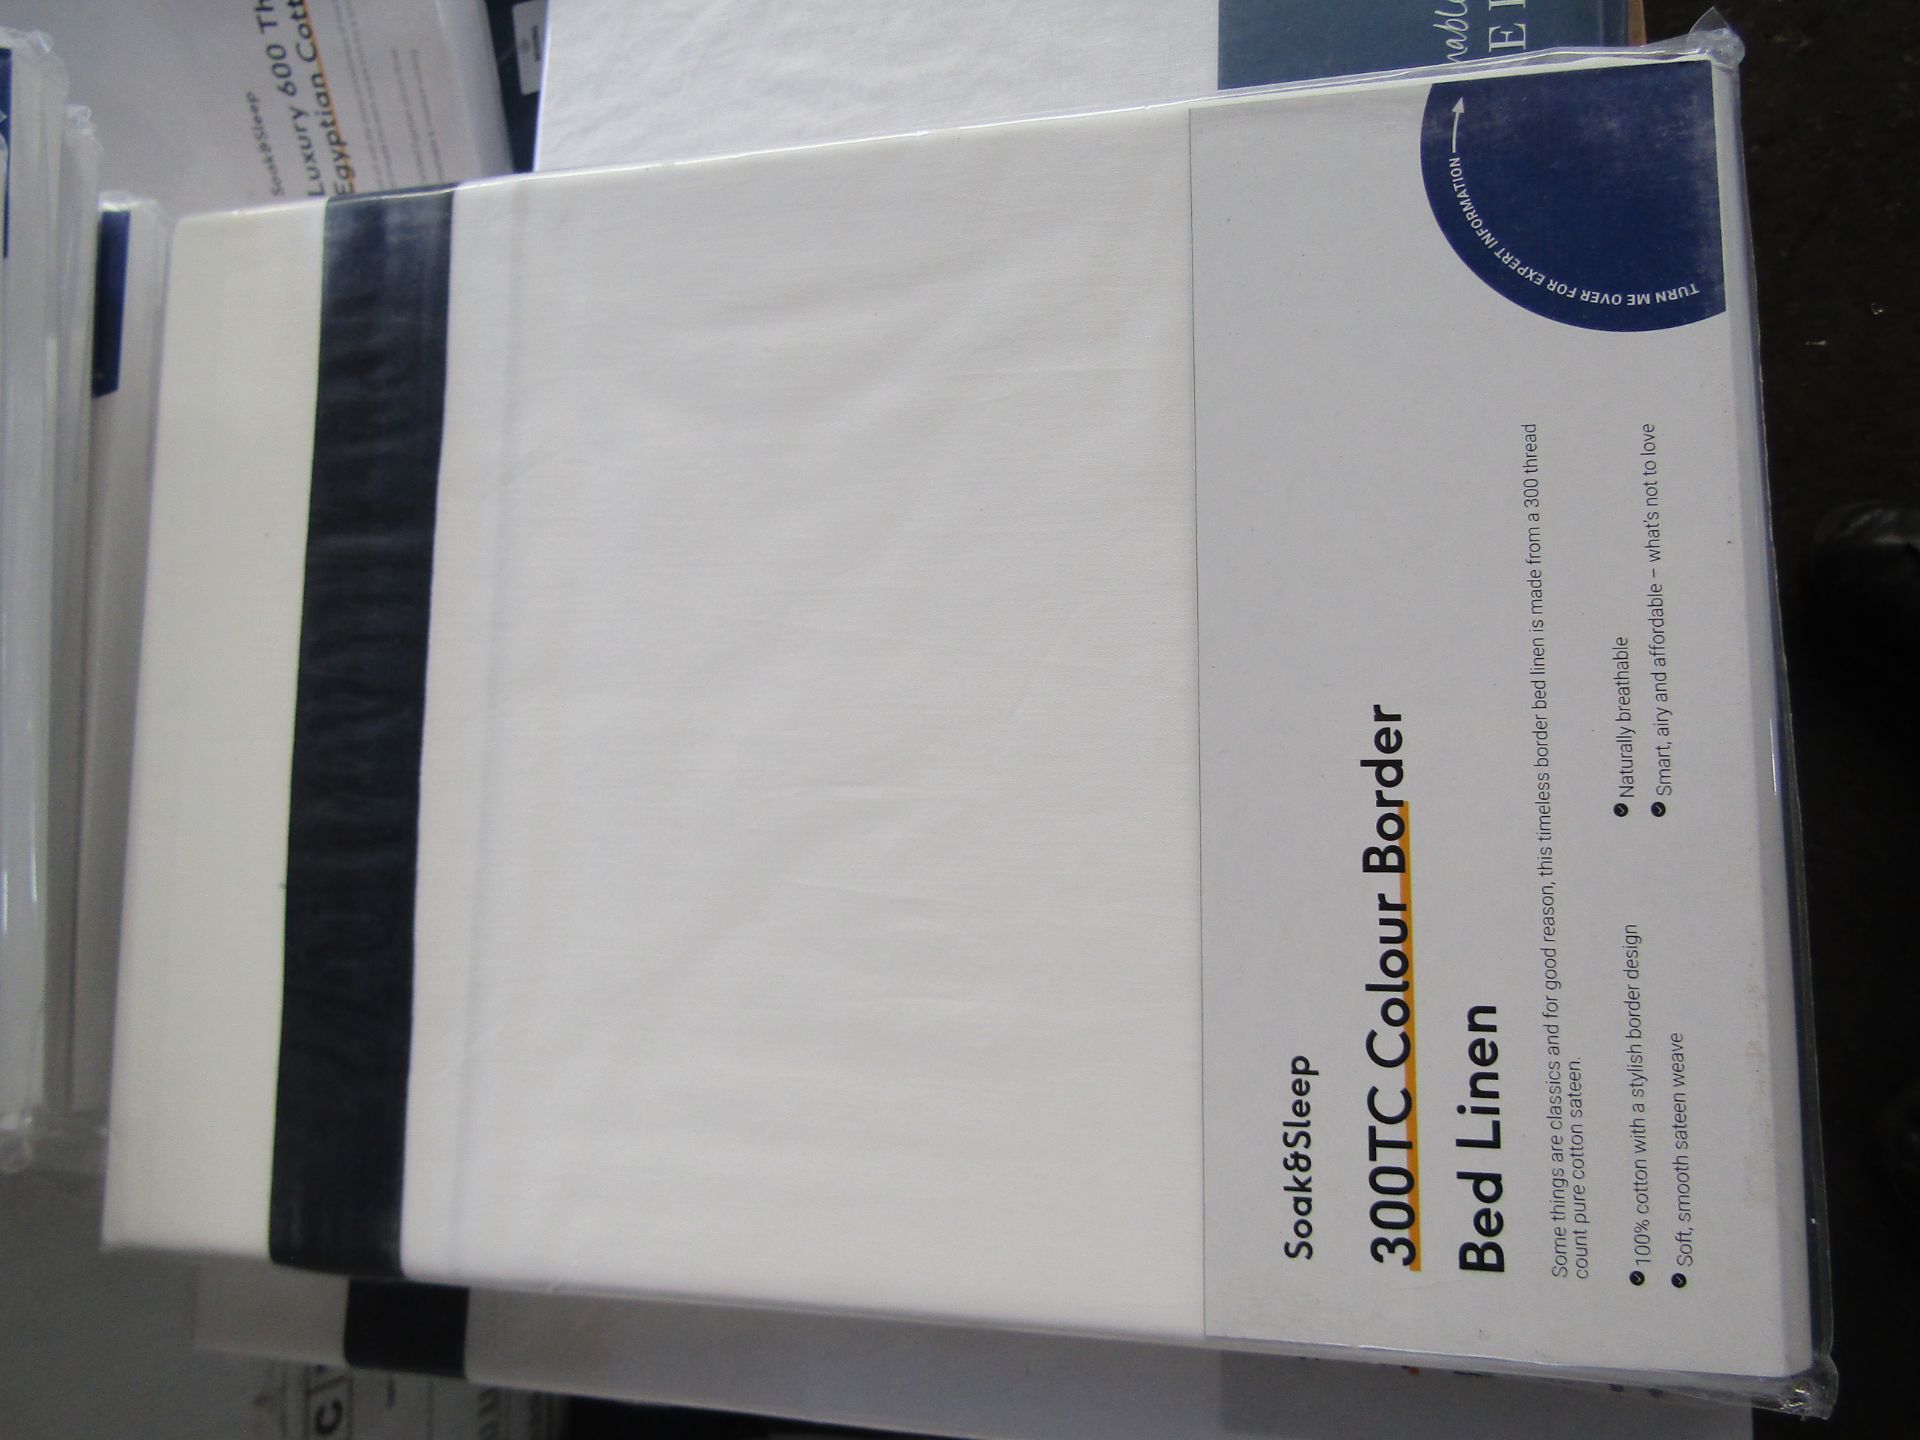 Soak & Sleep Soak & Sleep White/Navy 300TC Colour Border Cotton Single Flat Sheet RRP 17 Add - Image 2 of 2